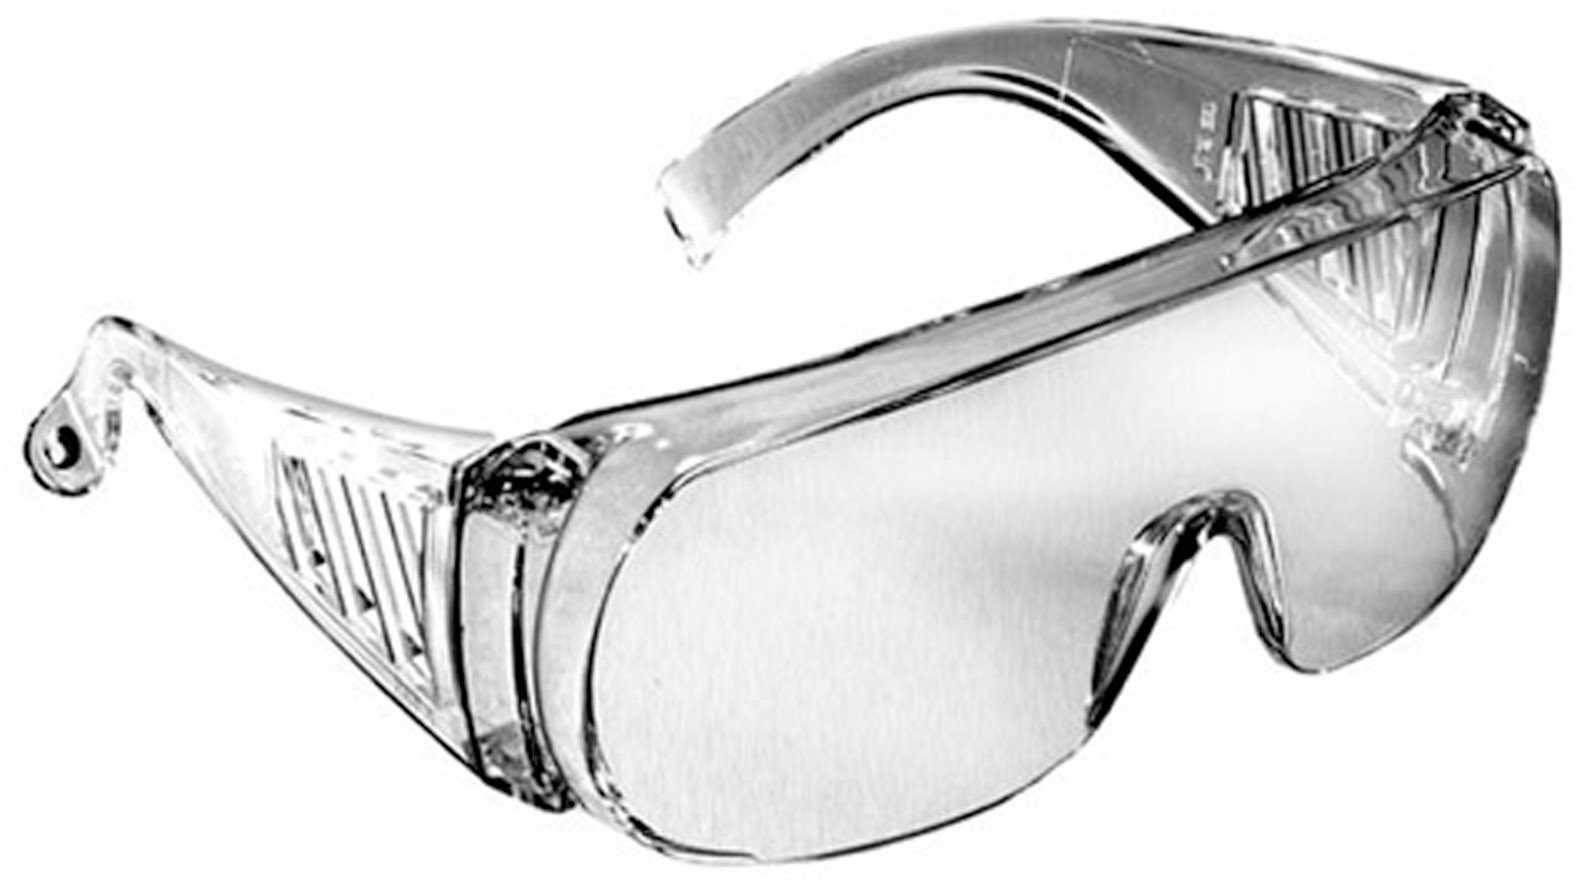 Rad Cv0010 COVERALLS Glasses Clear